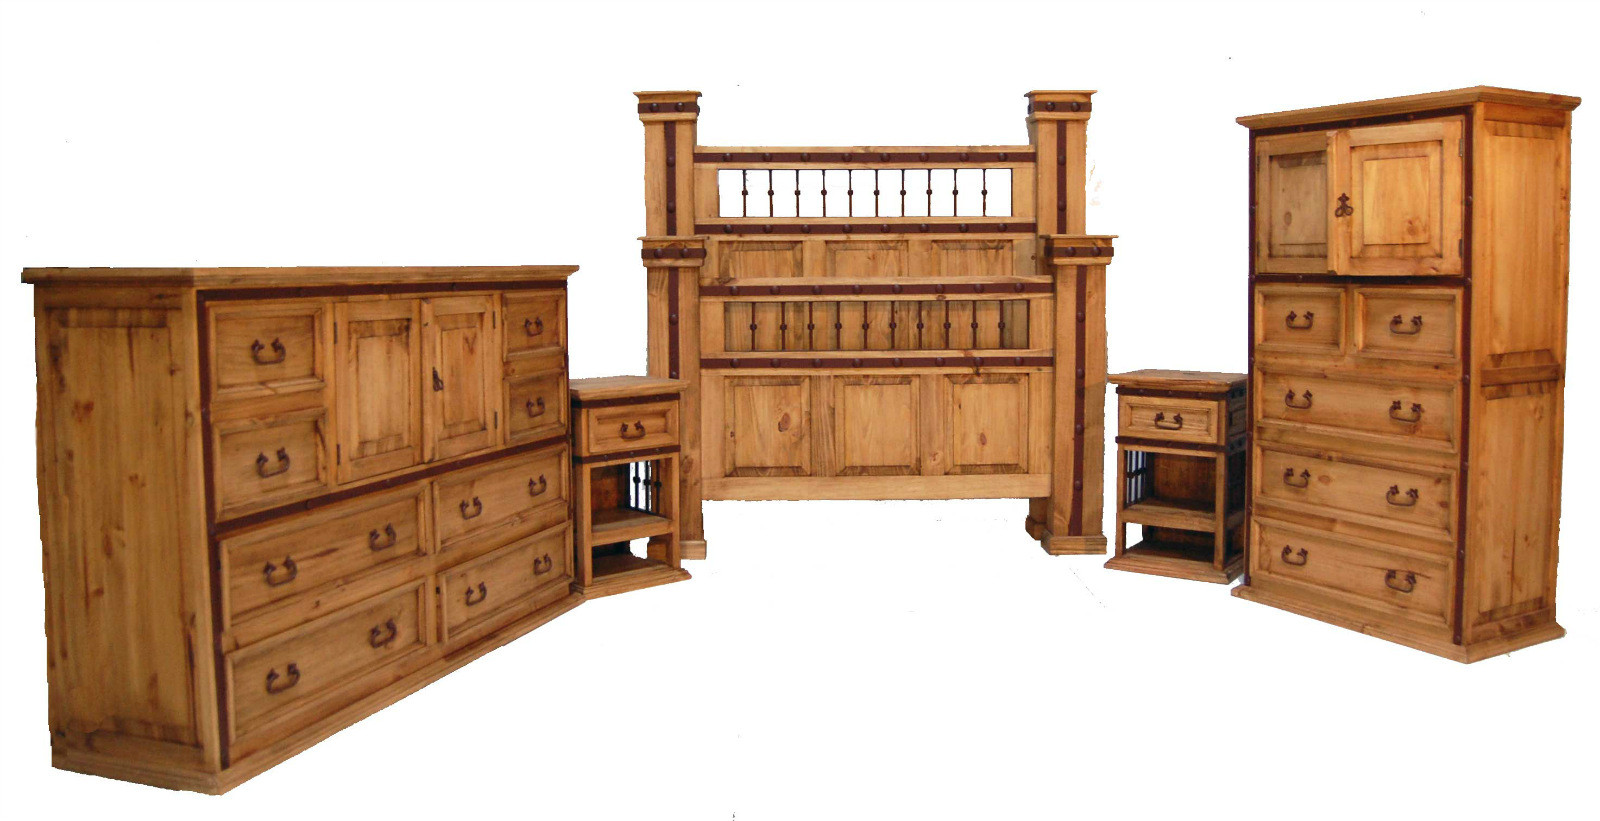 Rustic Wood Bedroom Furniture
 Honey Rustic King Hierro Bedroom Set with Iron Accents